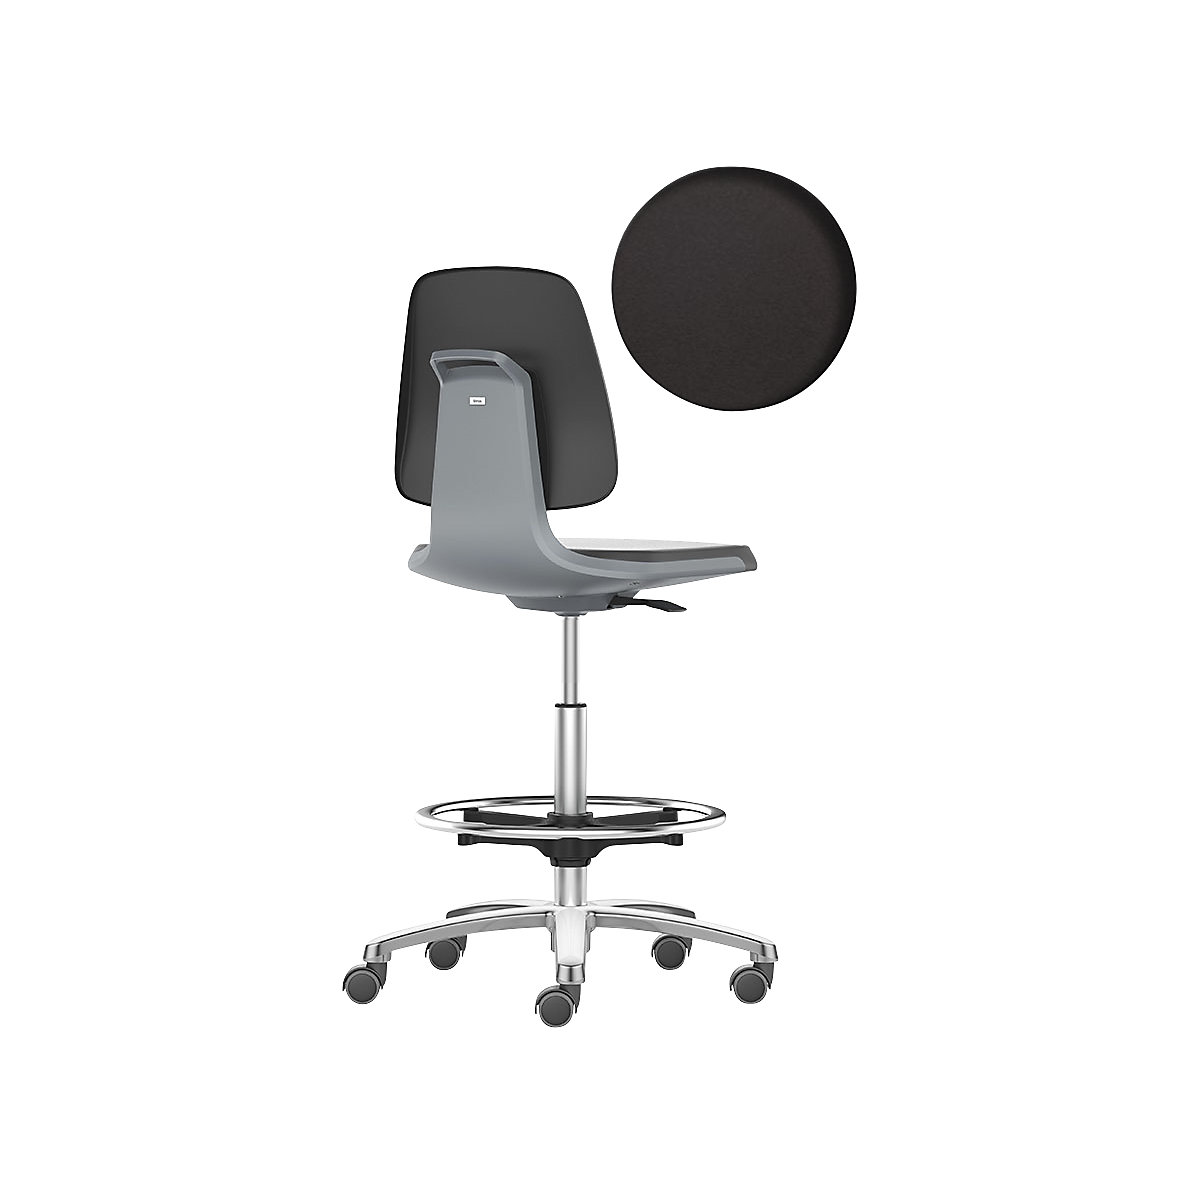 LABSIT industrial swivel chair - bimos